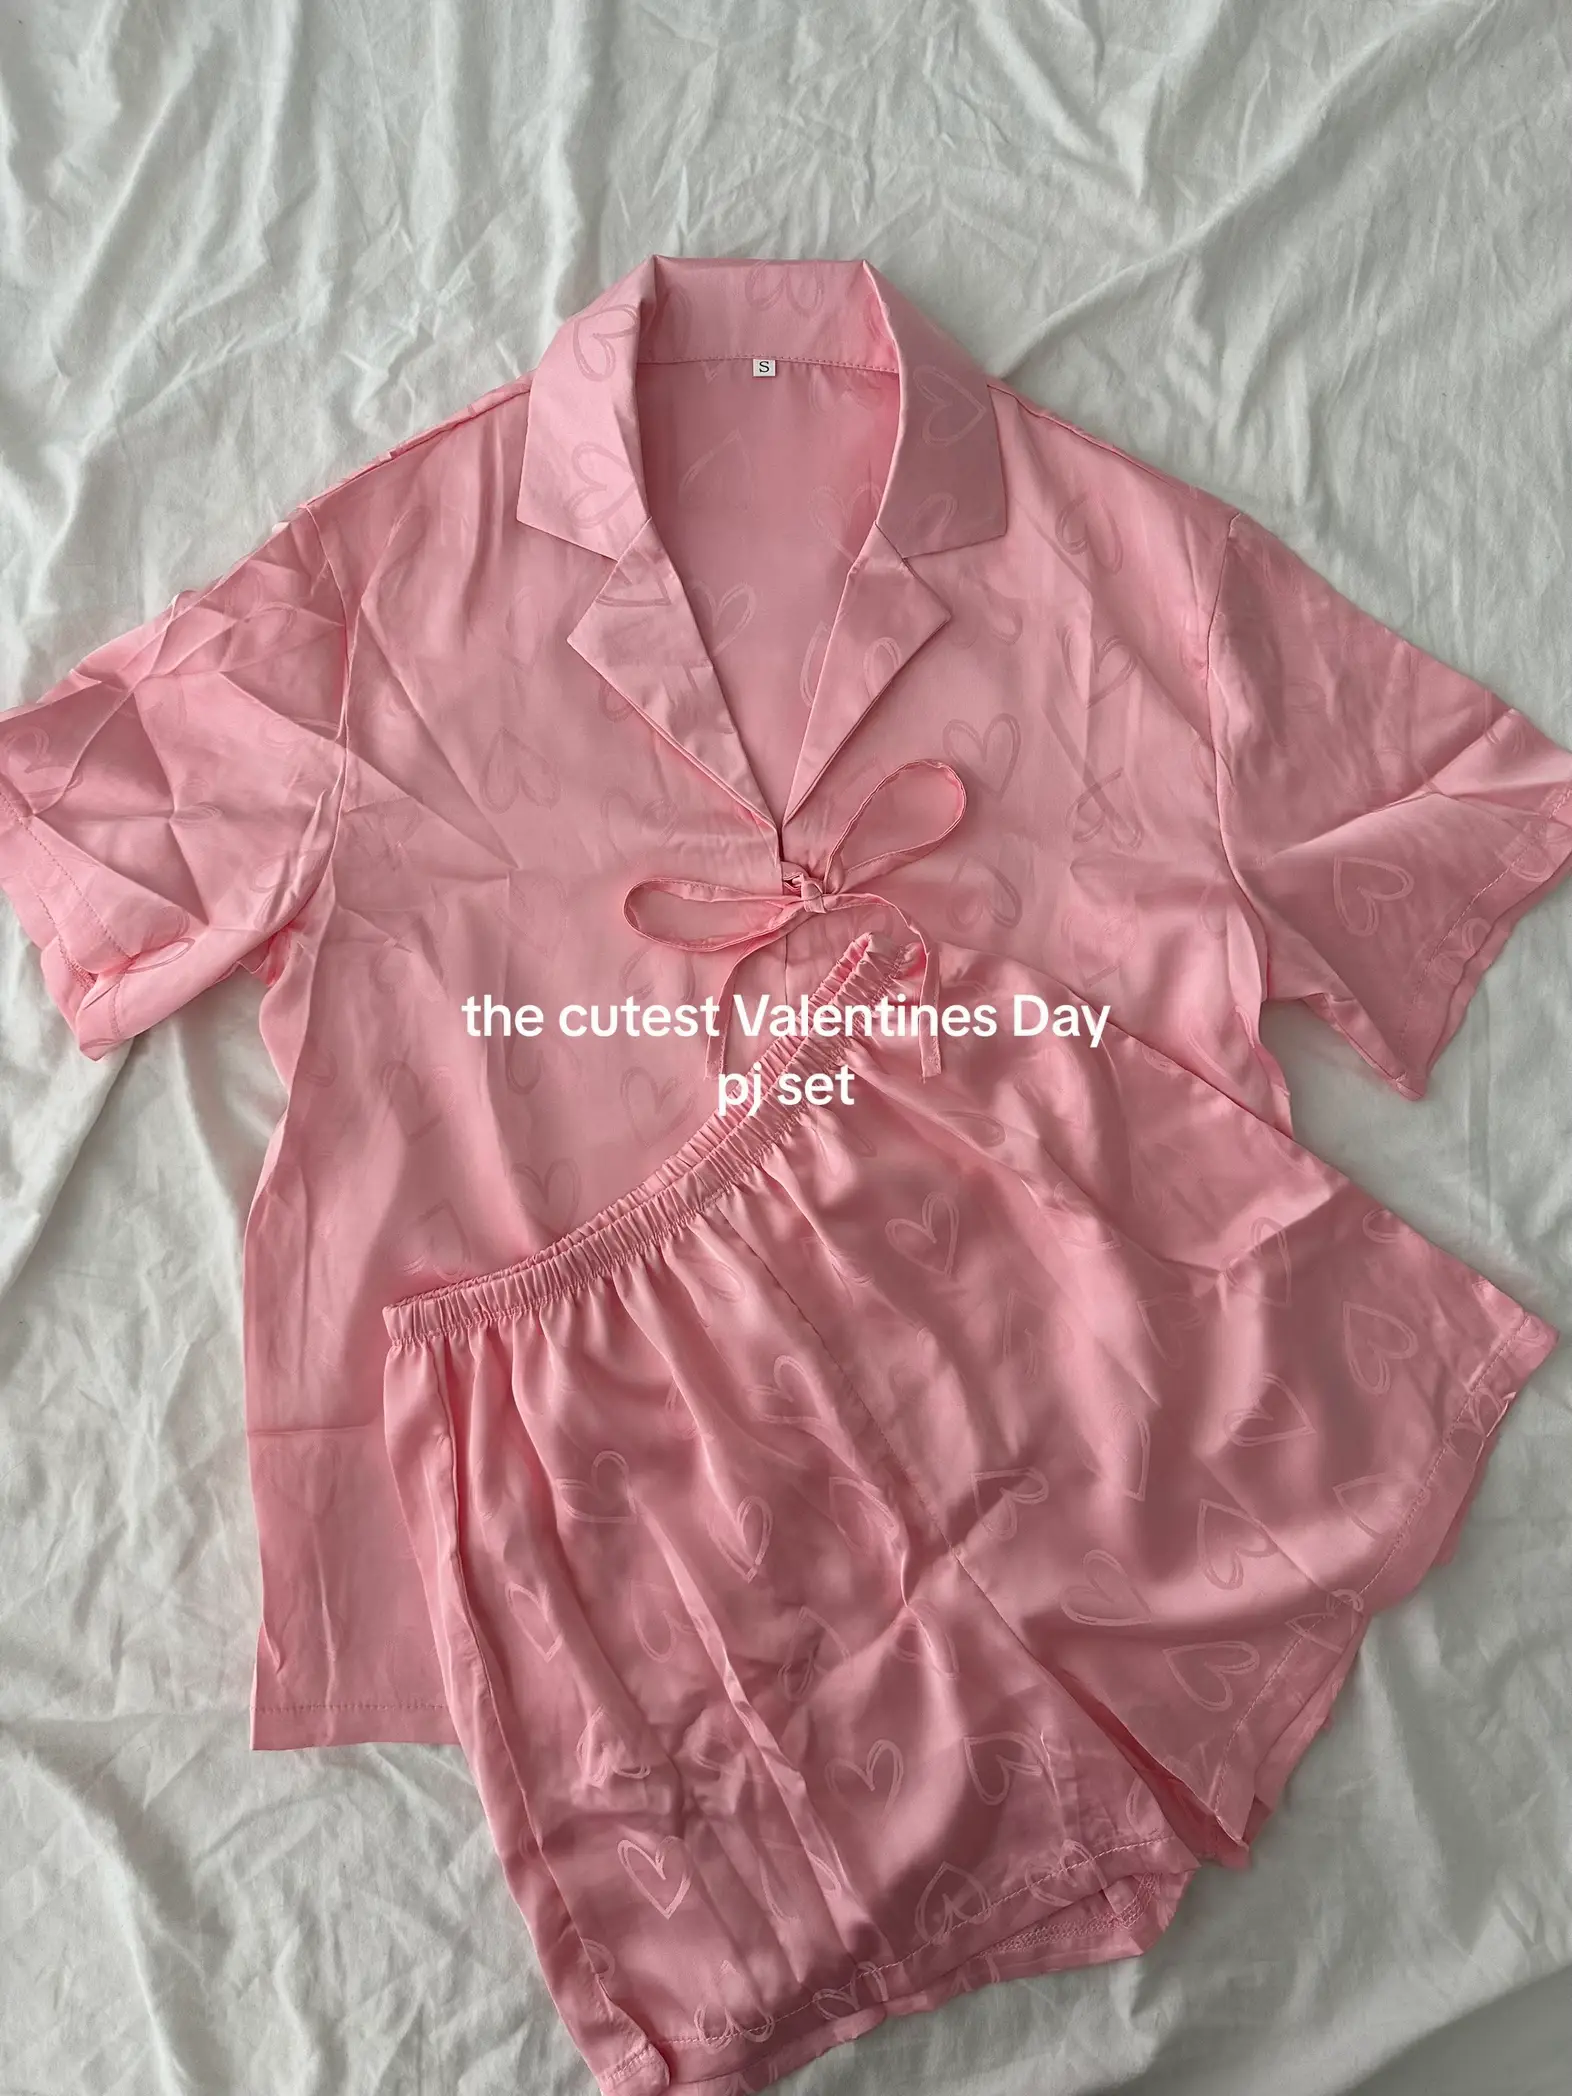 Forever 21 Women's Kiss Print Pajama Slip Dress in Vanilla/Pink Medium